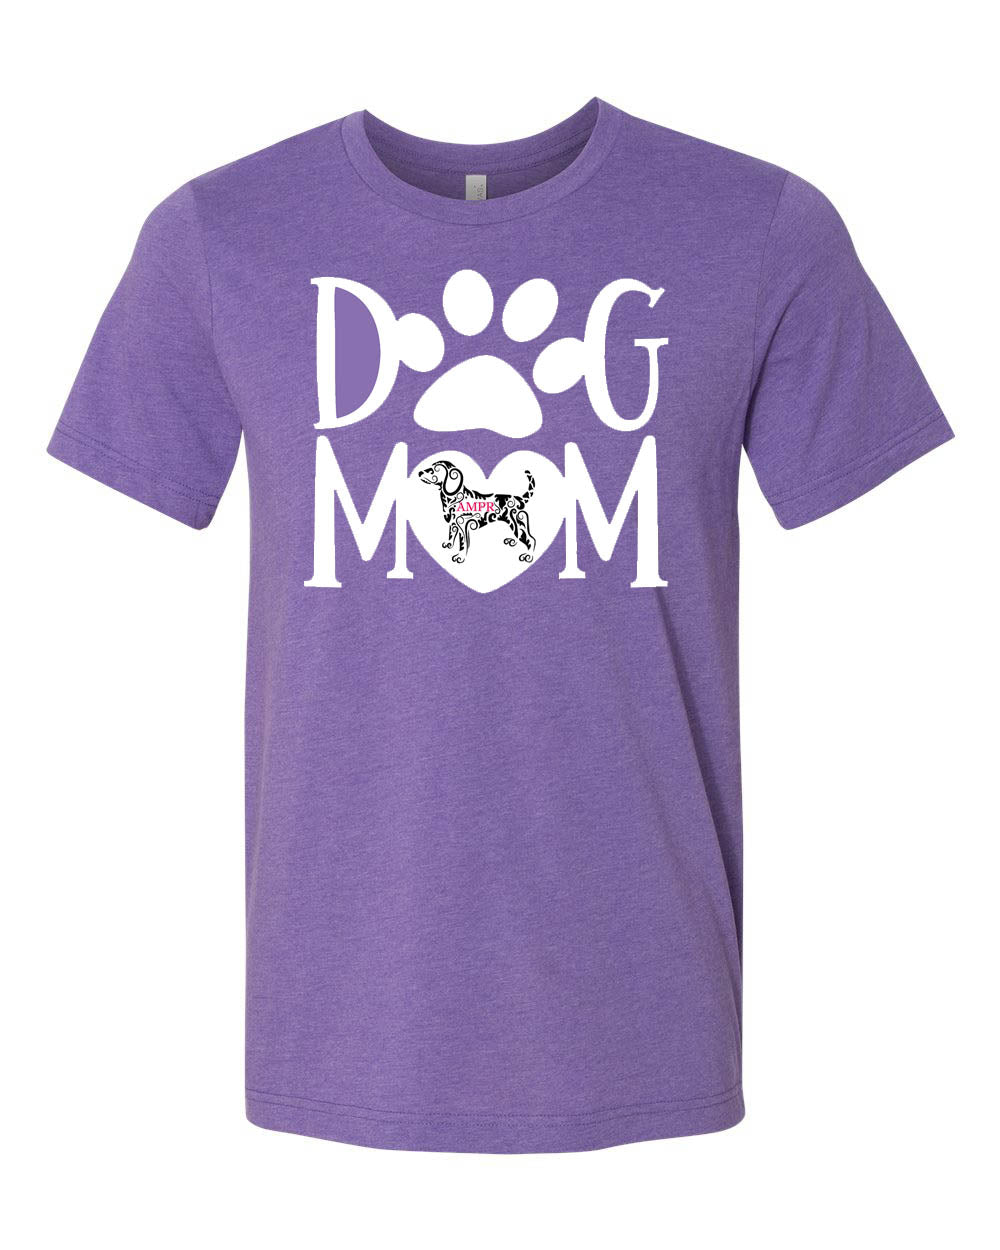 AMPR Dog Mom Shirt